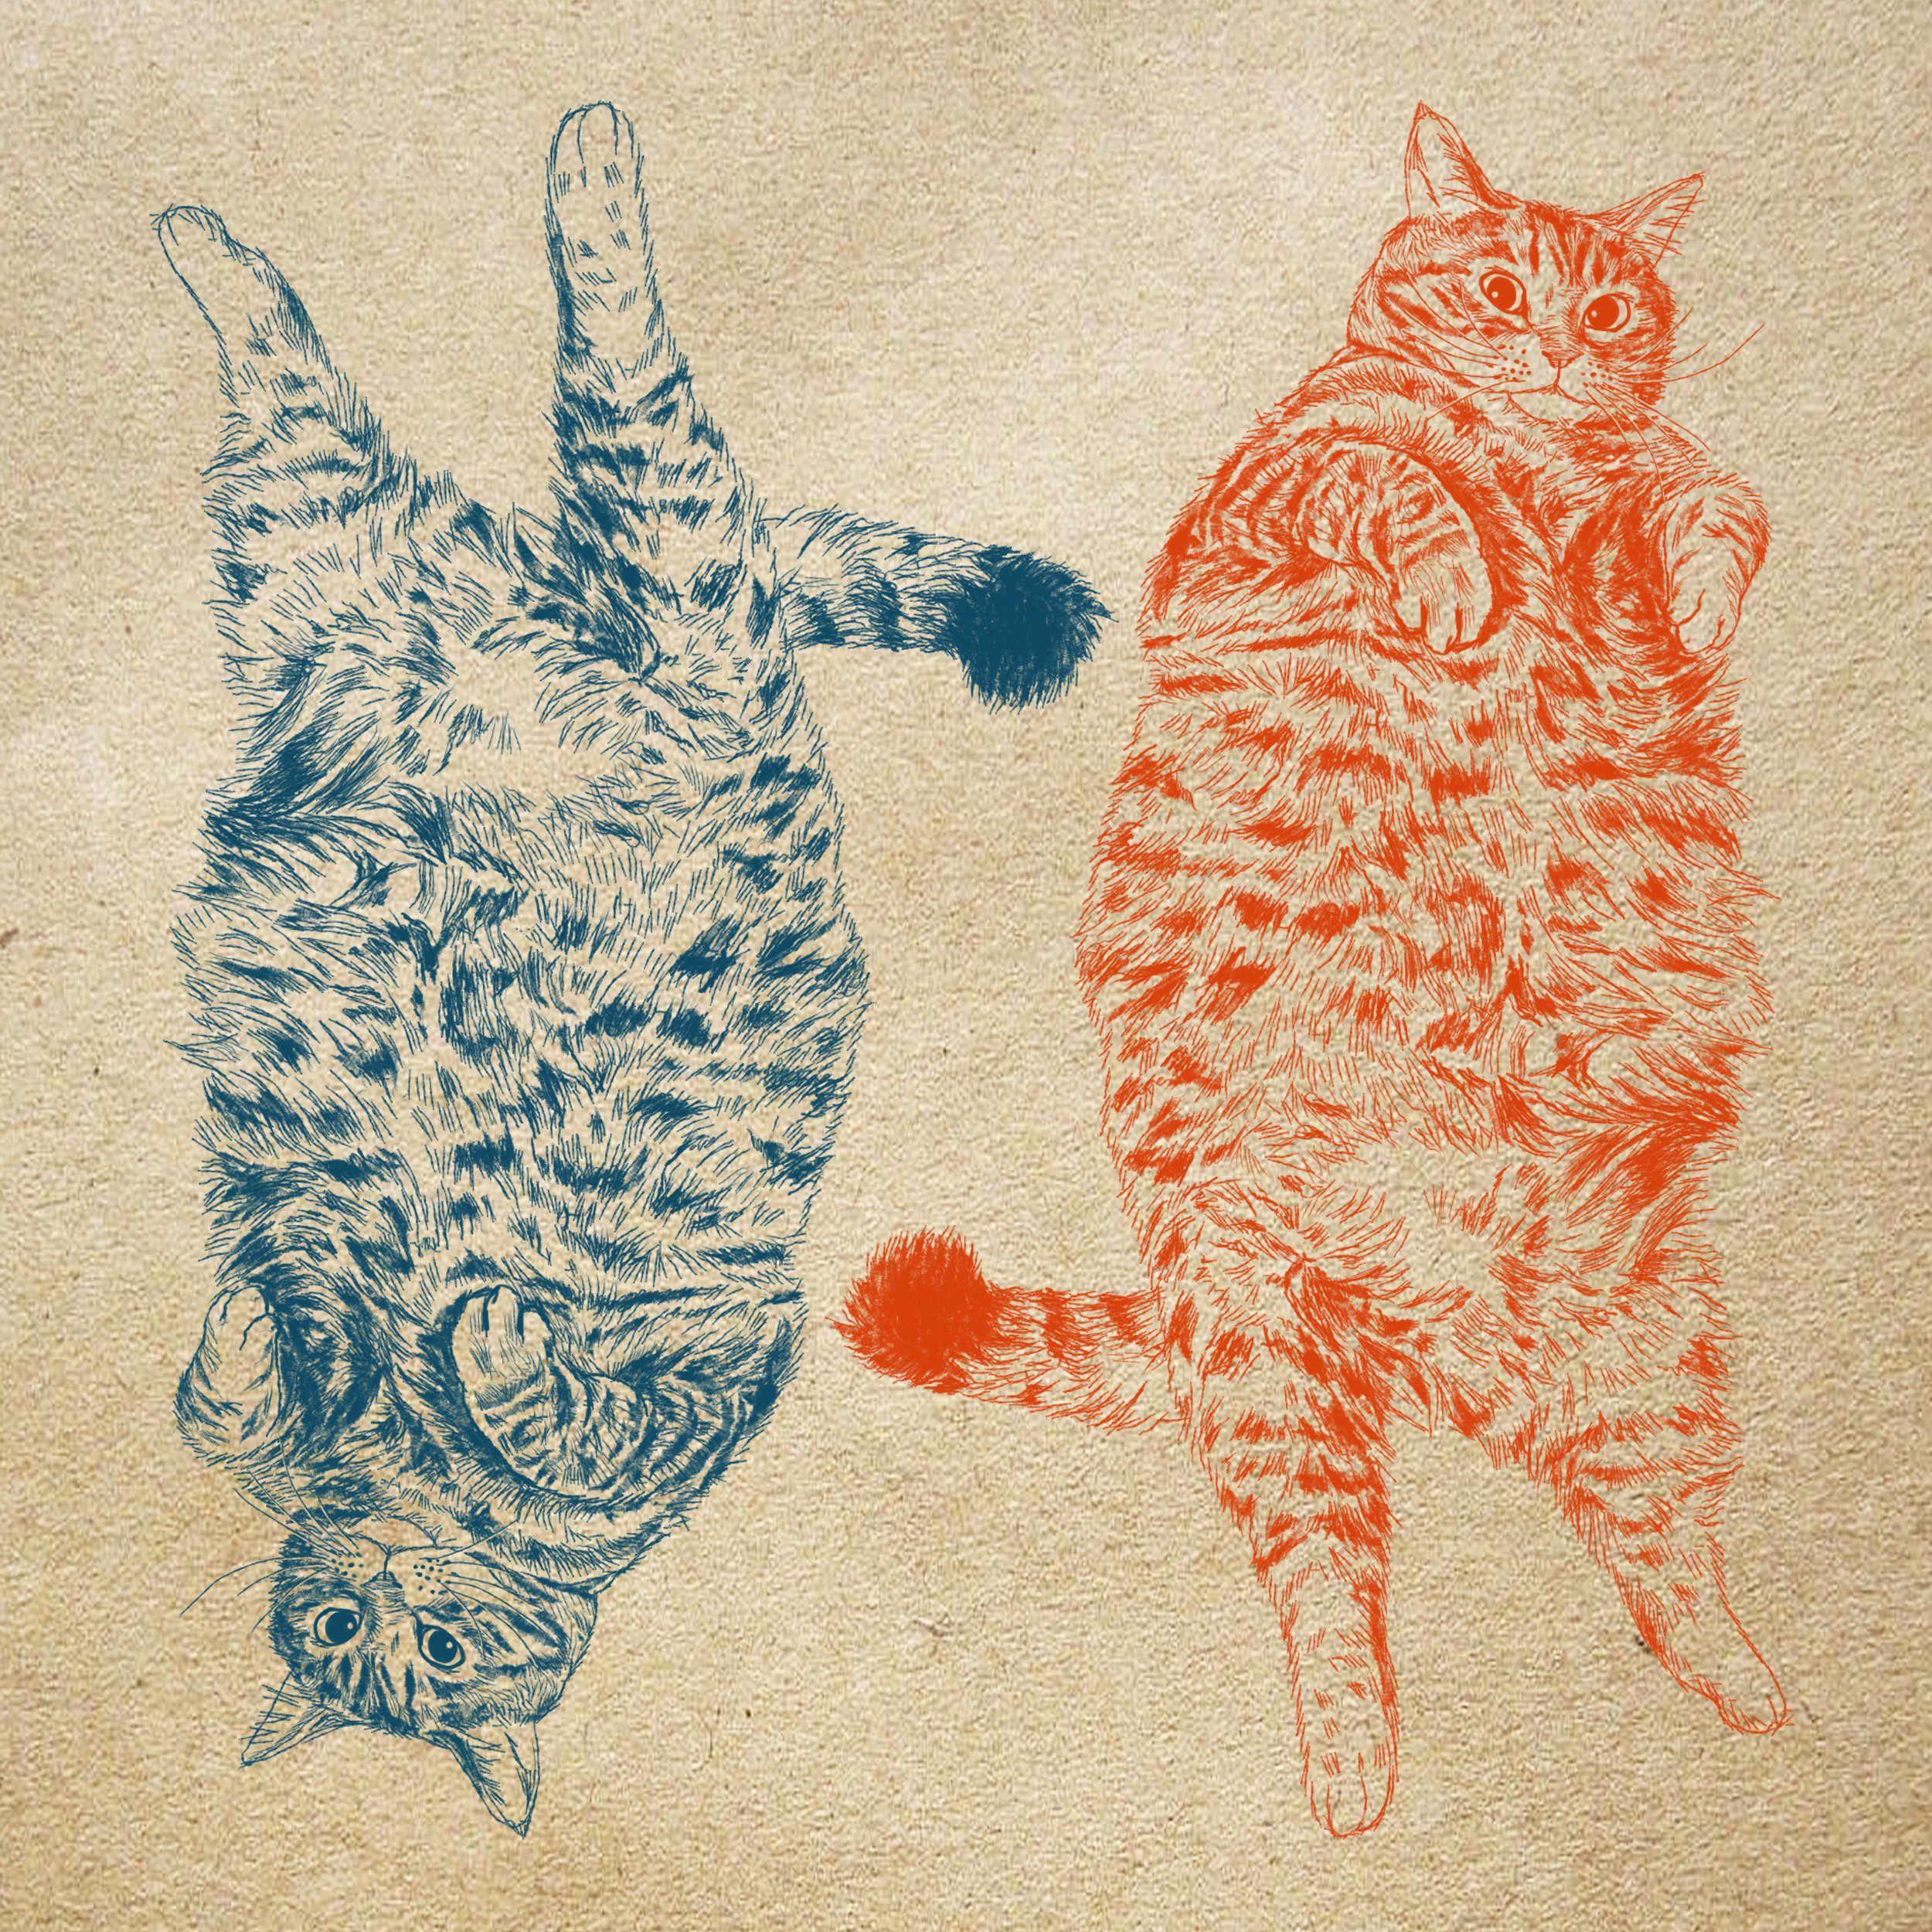 تويتر Orie Kawamura イラストレーター デザイナー على تويتر 365日 猫の絵を描いてます T Co Ctxjattstj Monimalお休みの間 インスタご覧頂ければ幸いです おしゃれイラスト 猫イラスト 猫アート 猫絵 T Co Kzsxhbvlup